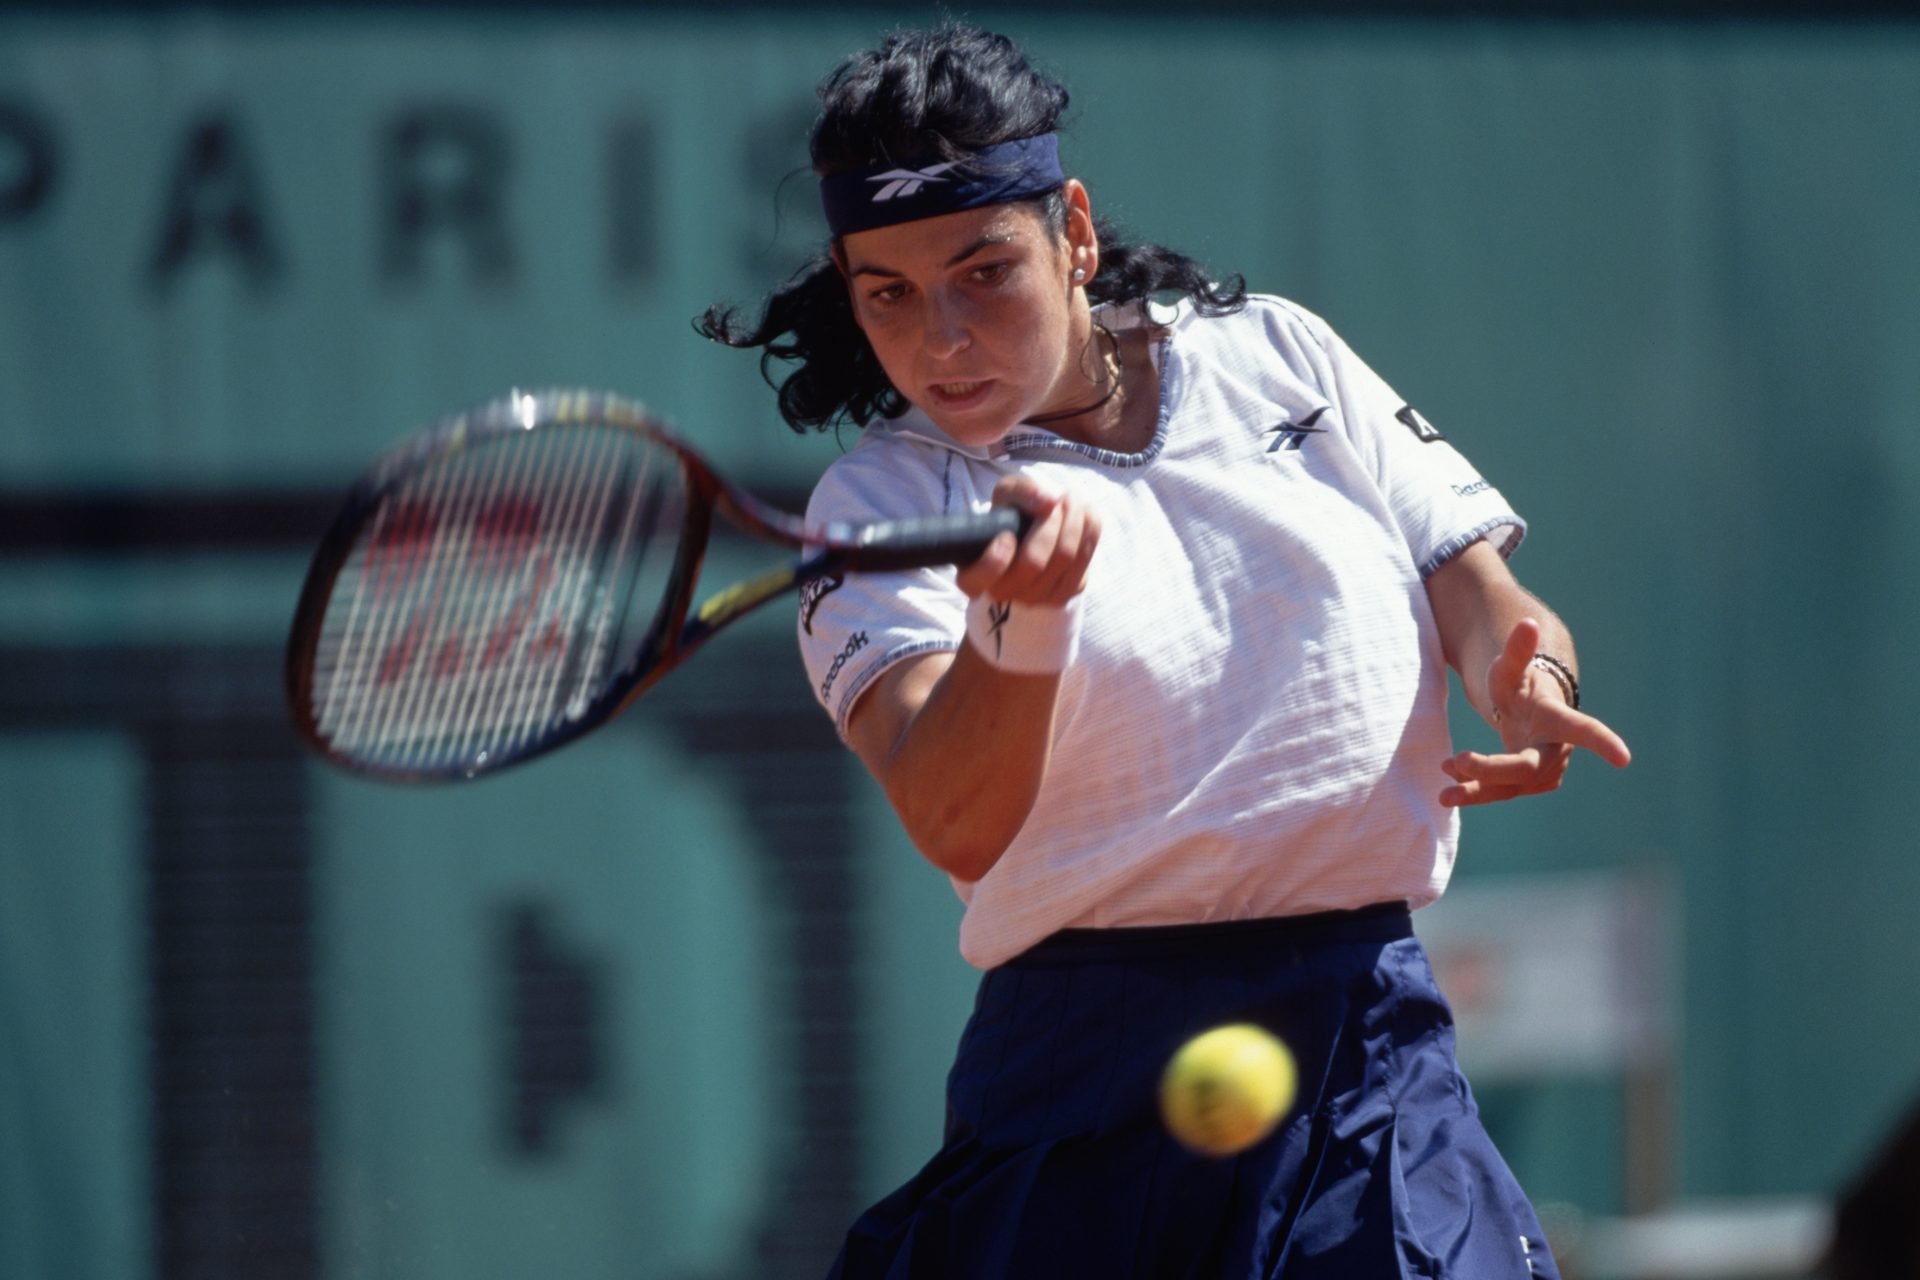 The remarkable story of former tennis star Arantxa Sánchez Vicario